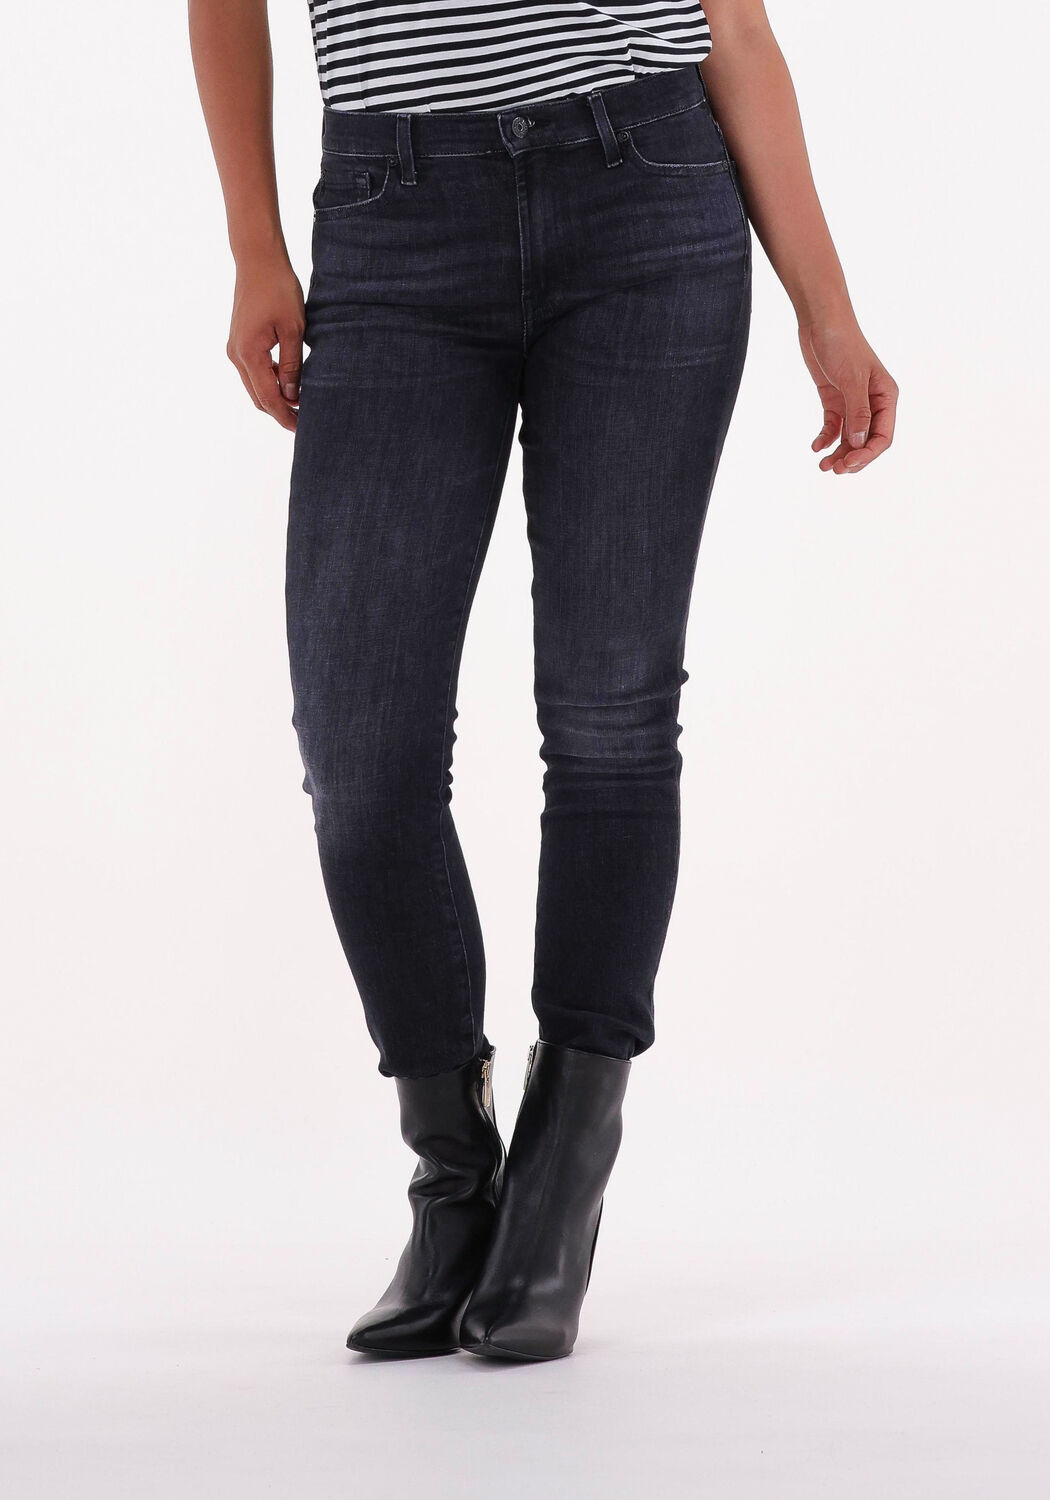 7 For All Mankind Skinny jeans zwart-donkergroen wetlook Mode Spijkerbroeken Skinny jeans 